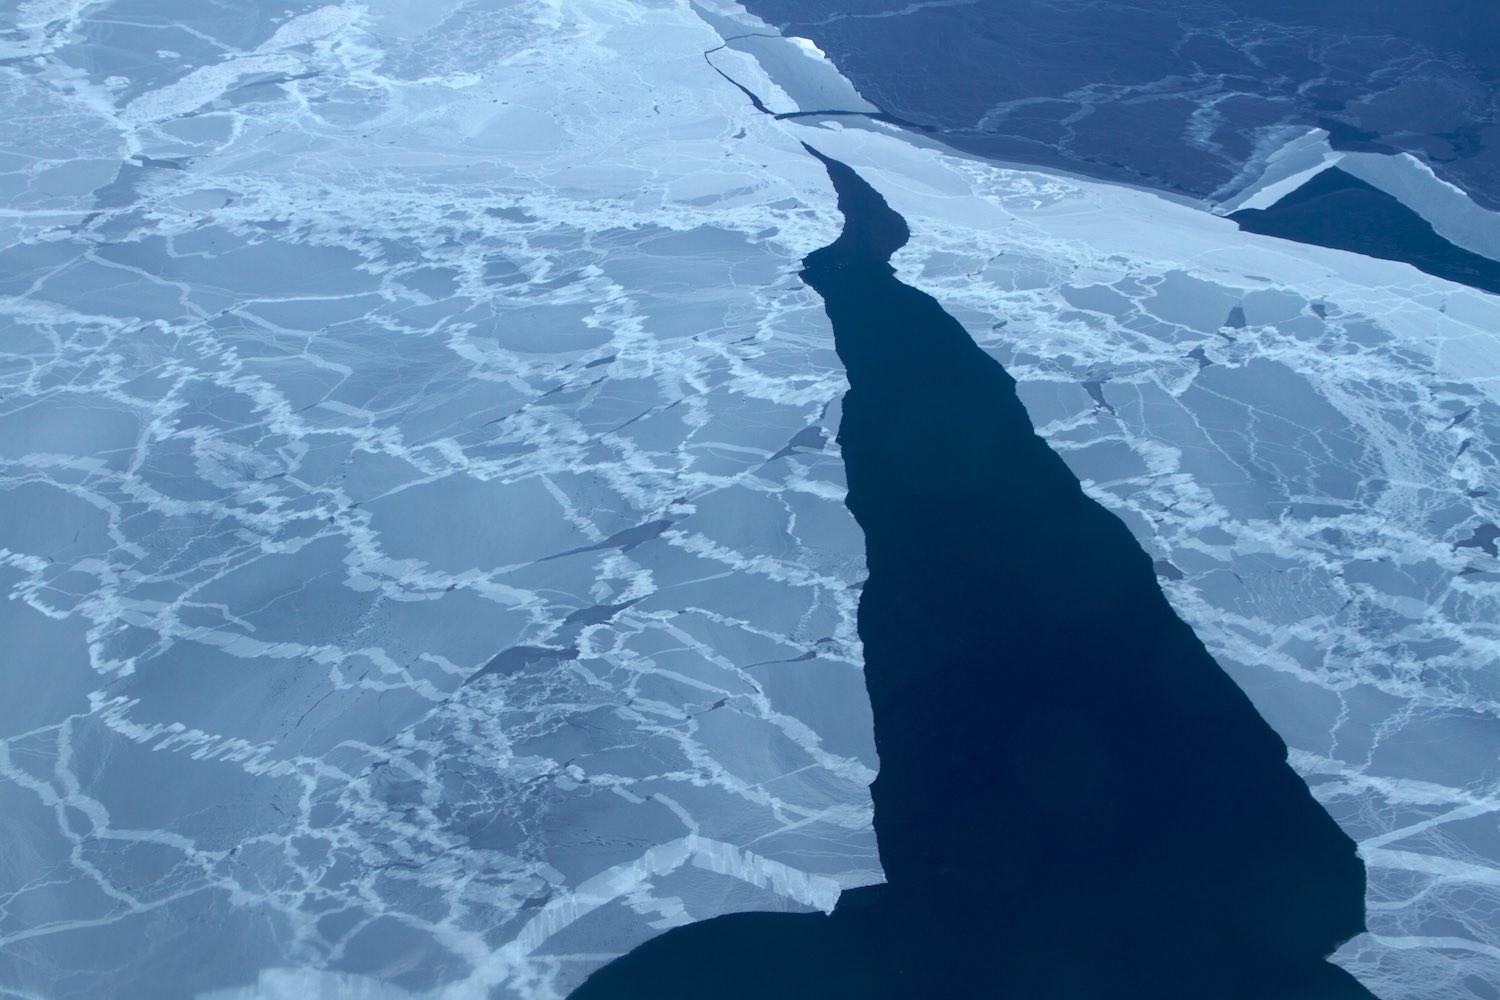  Sea ice breaking up off Greenland's coast 